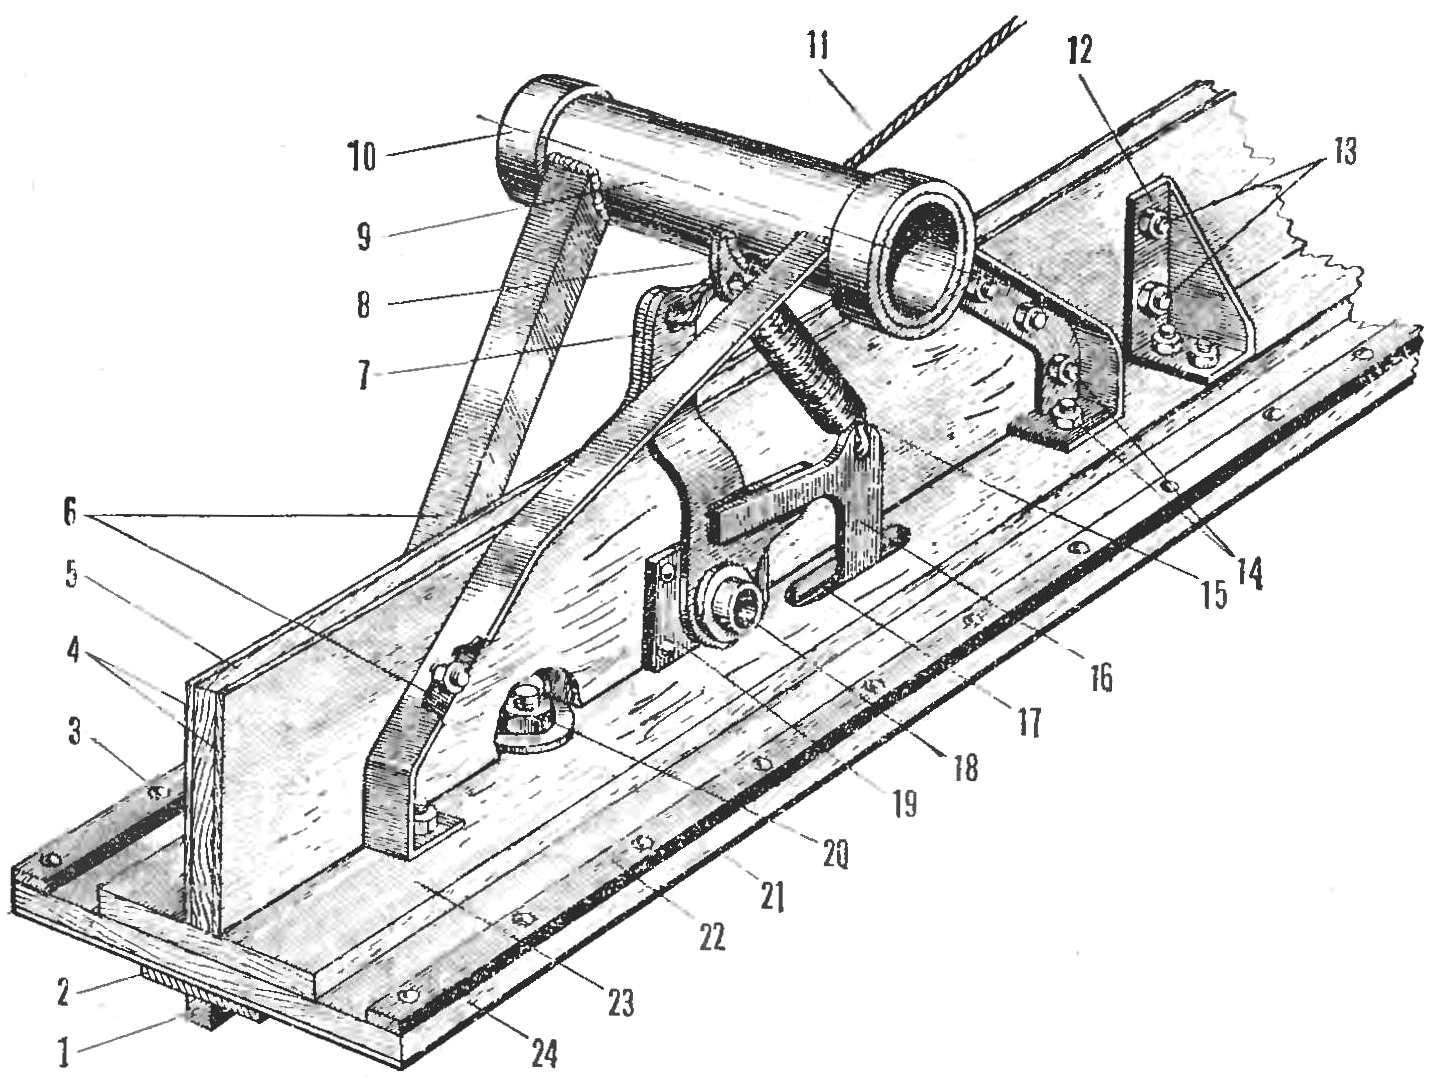 Fig. 7. Ski brake and its device